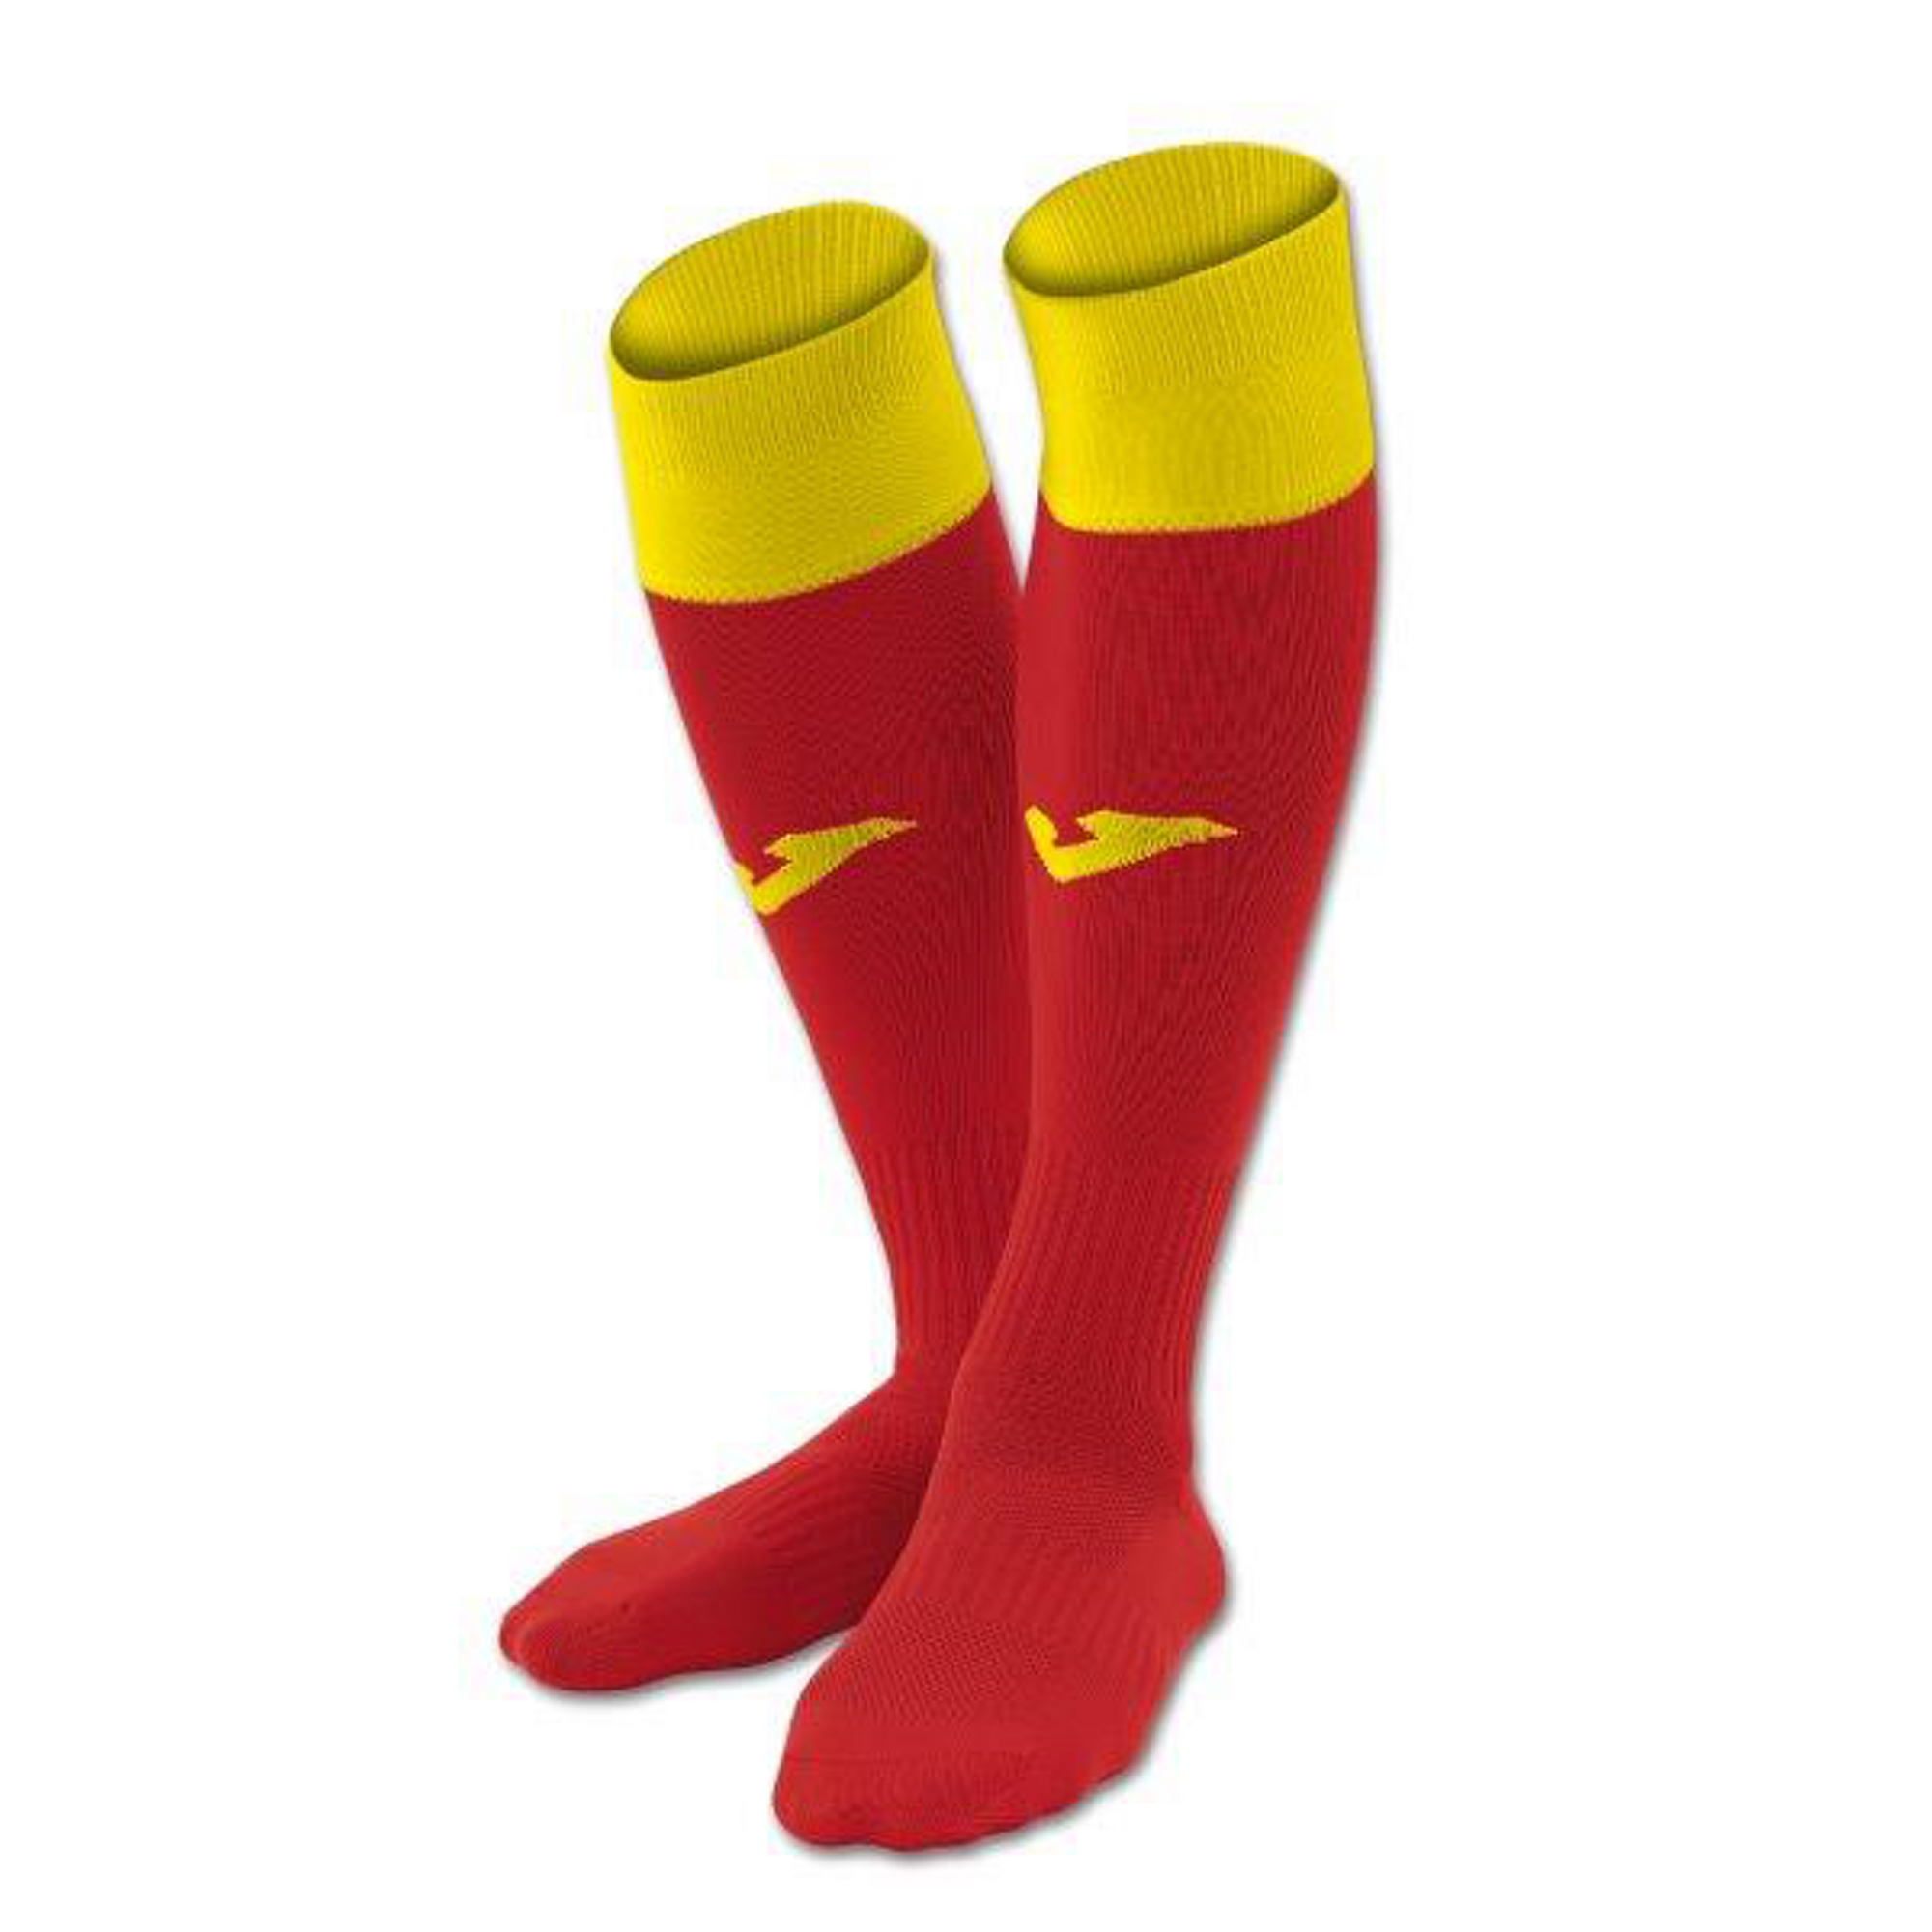 Joma Calcio Sock S (12-1.5) Red-yel